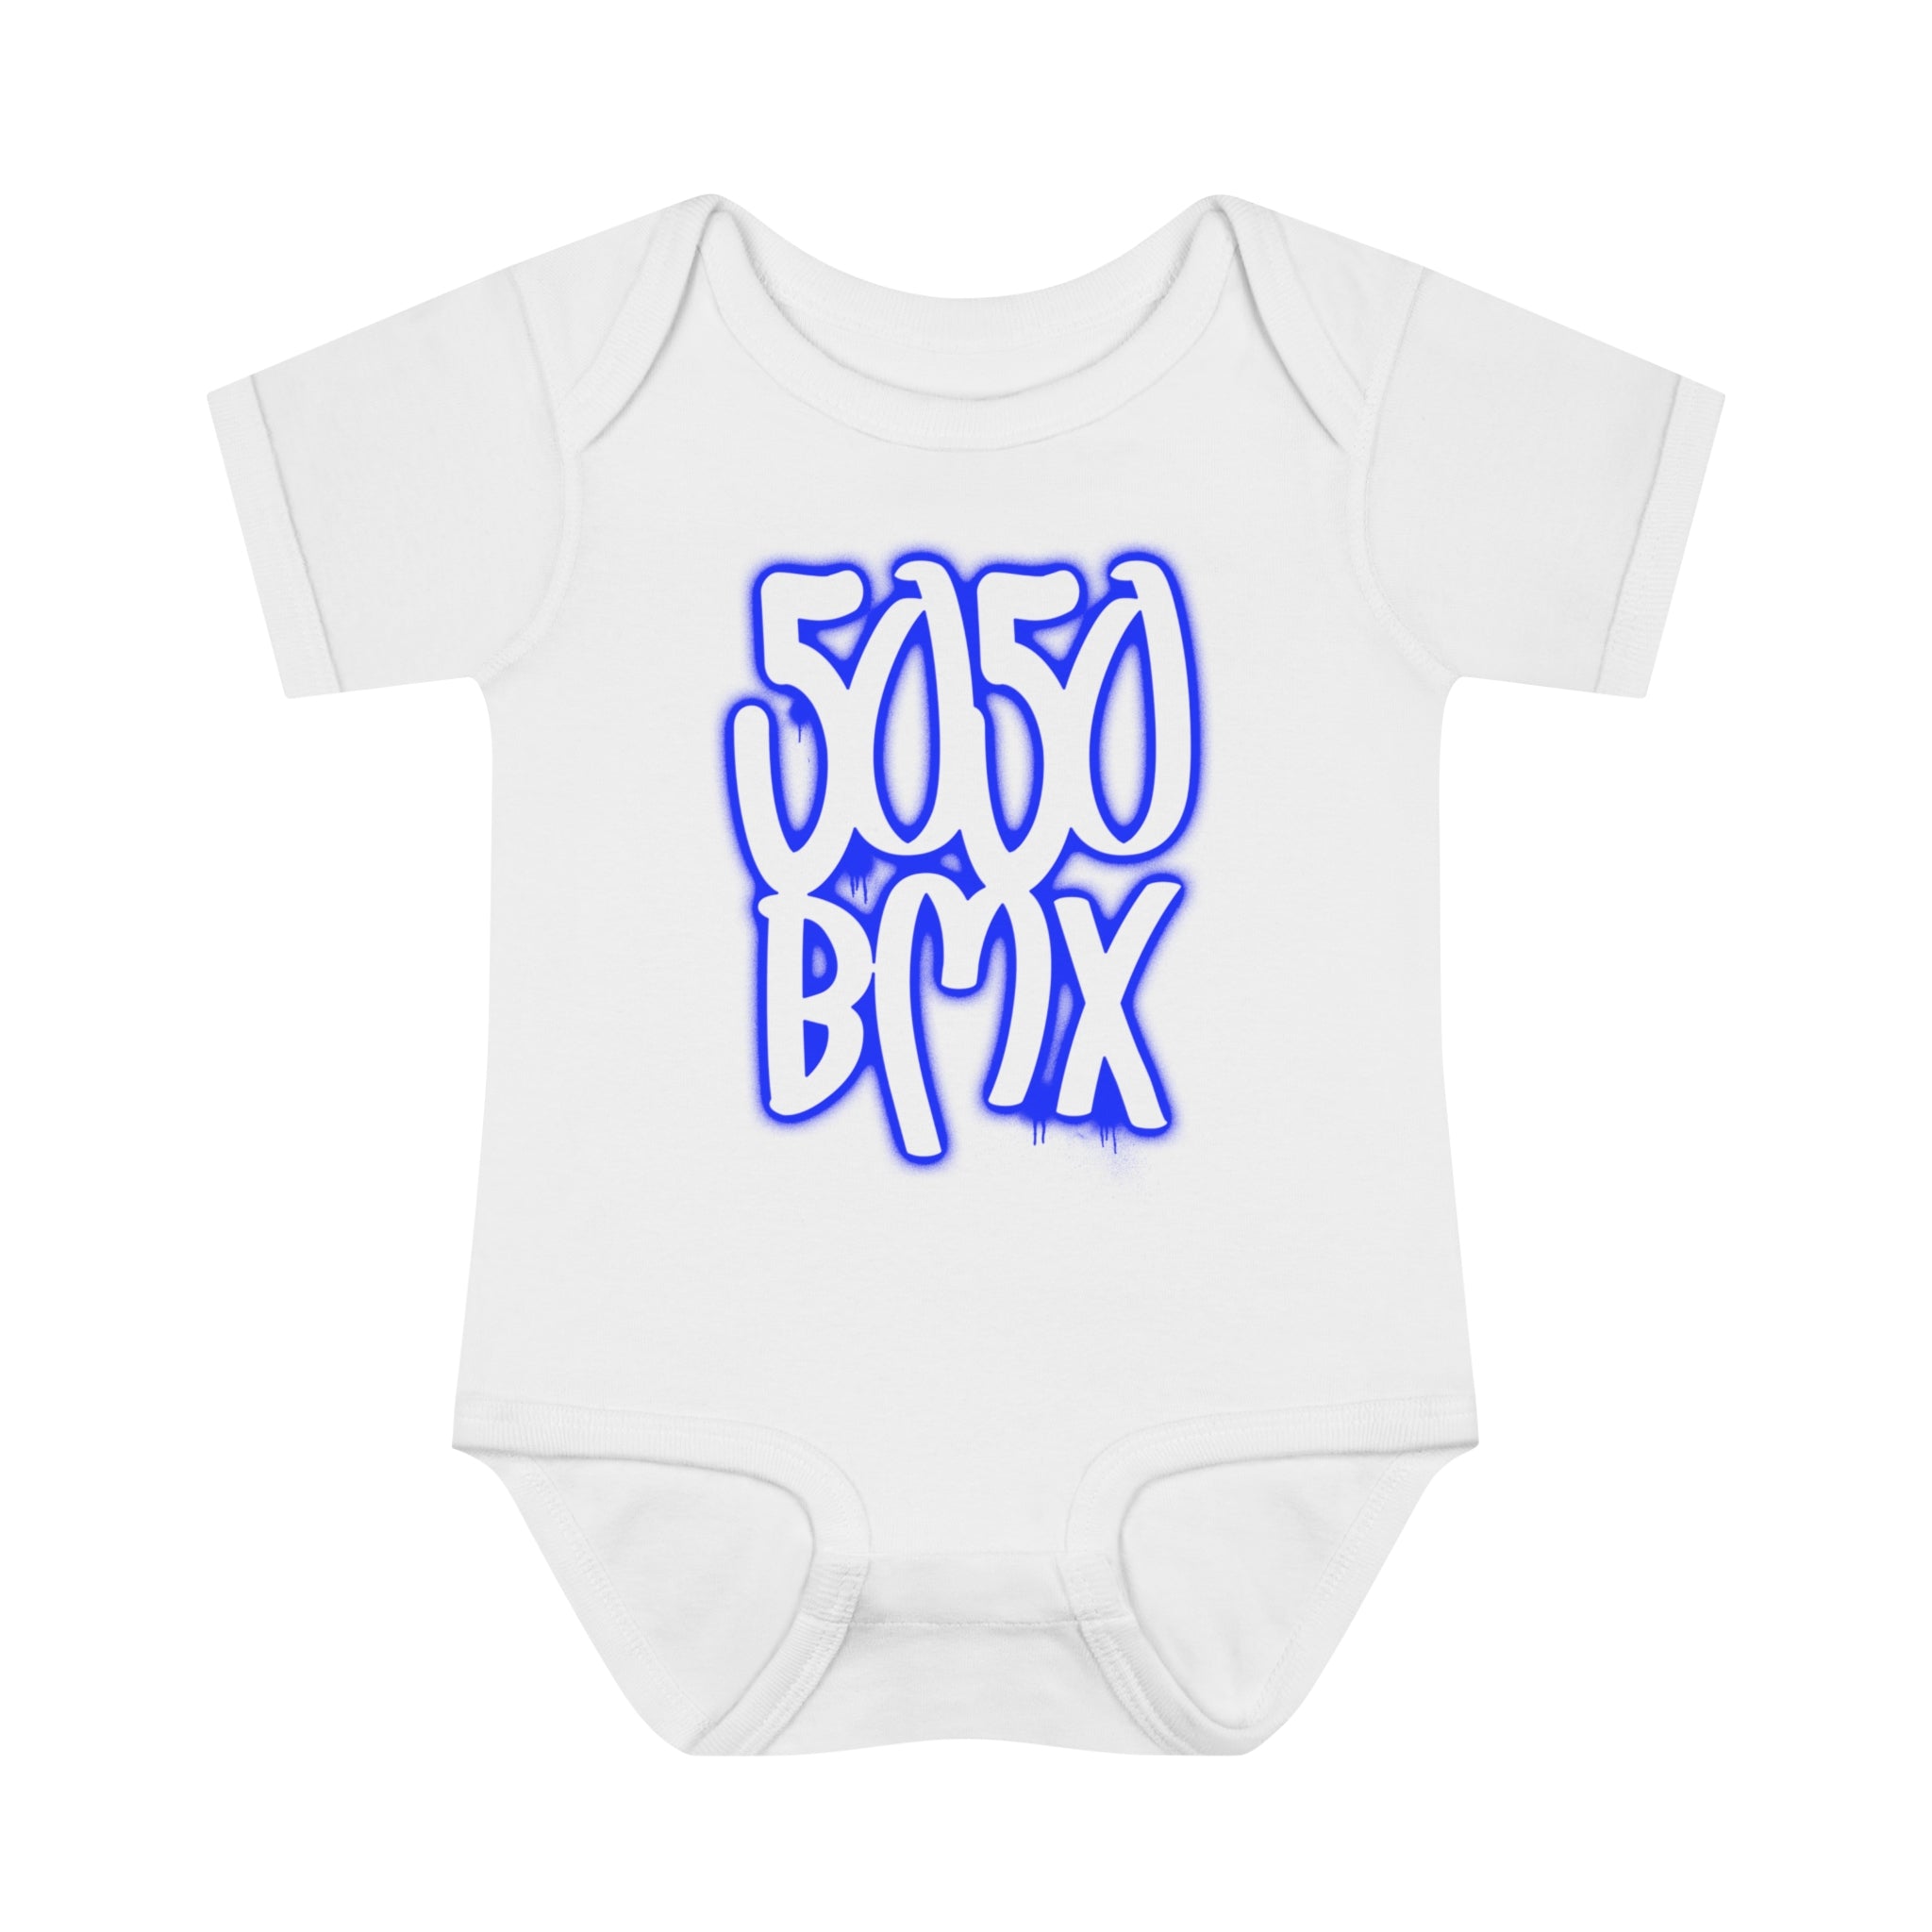 5050bmx Graffiti Infant Baby Onesie (Blue)